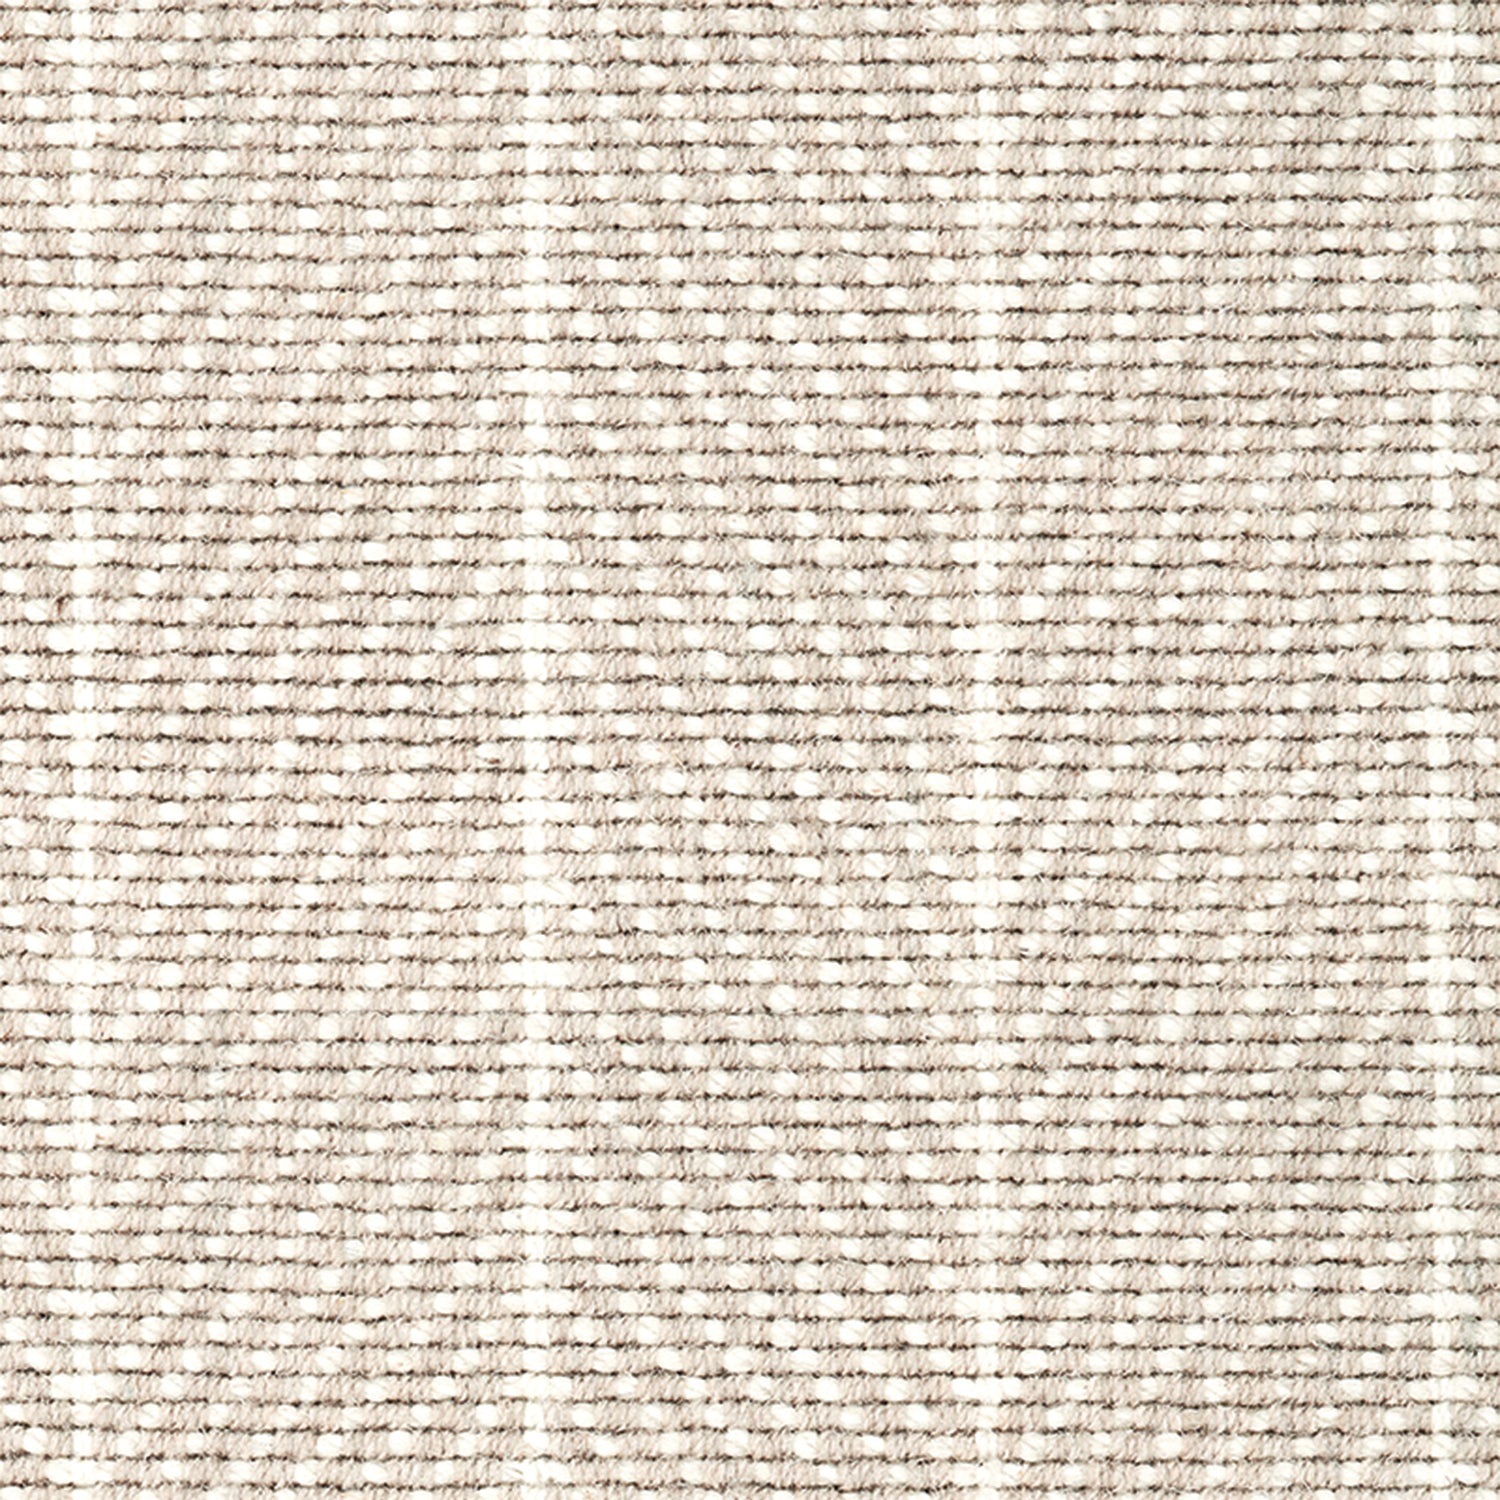 Wool broadloom carpet swatch in a herringbone stripe in beige and cream.